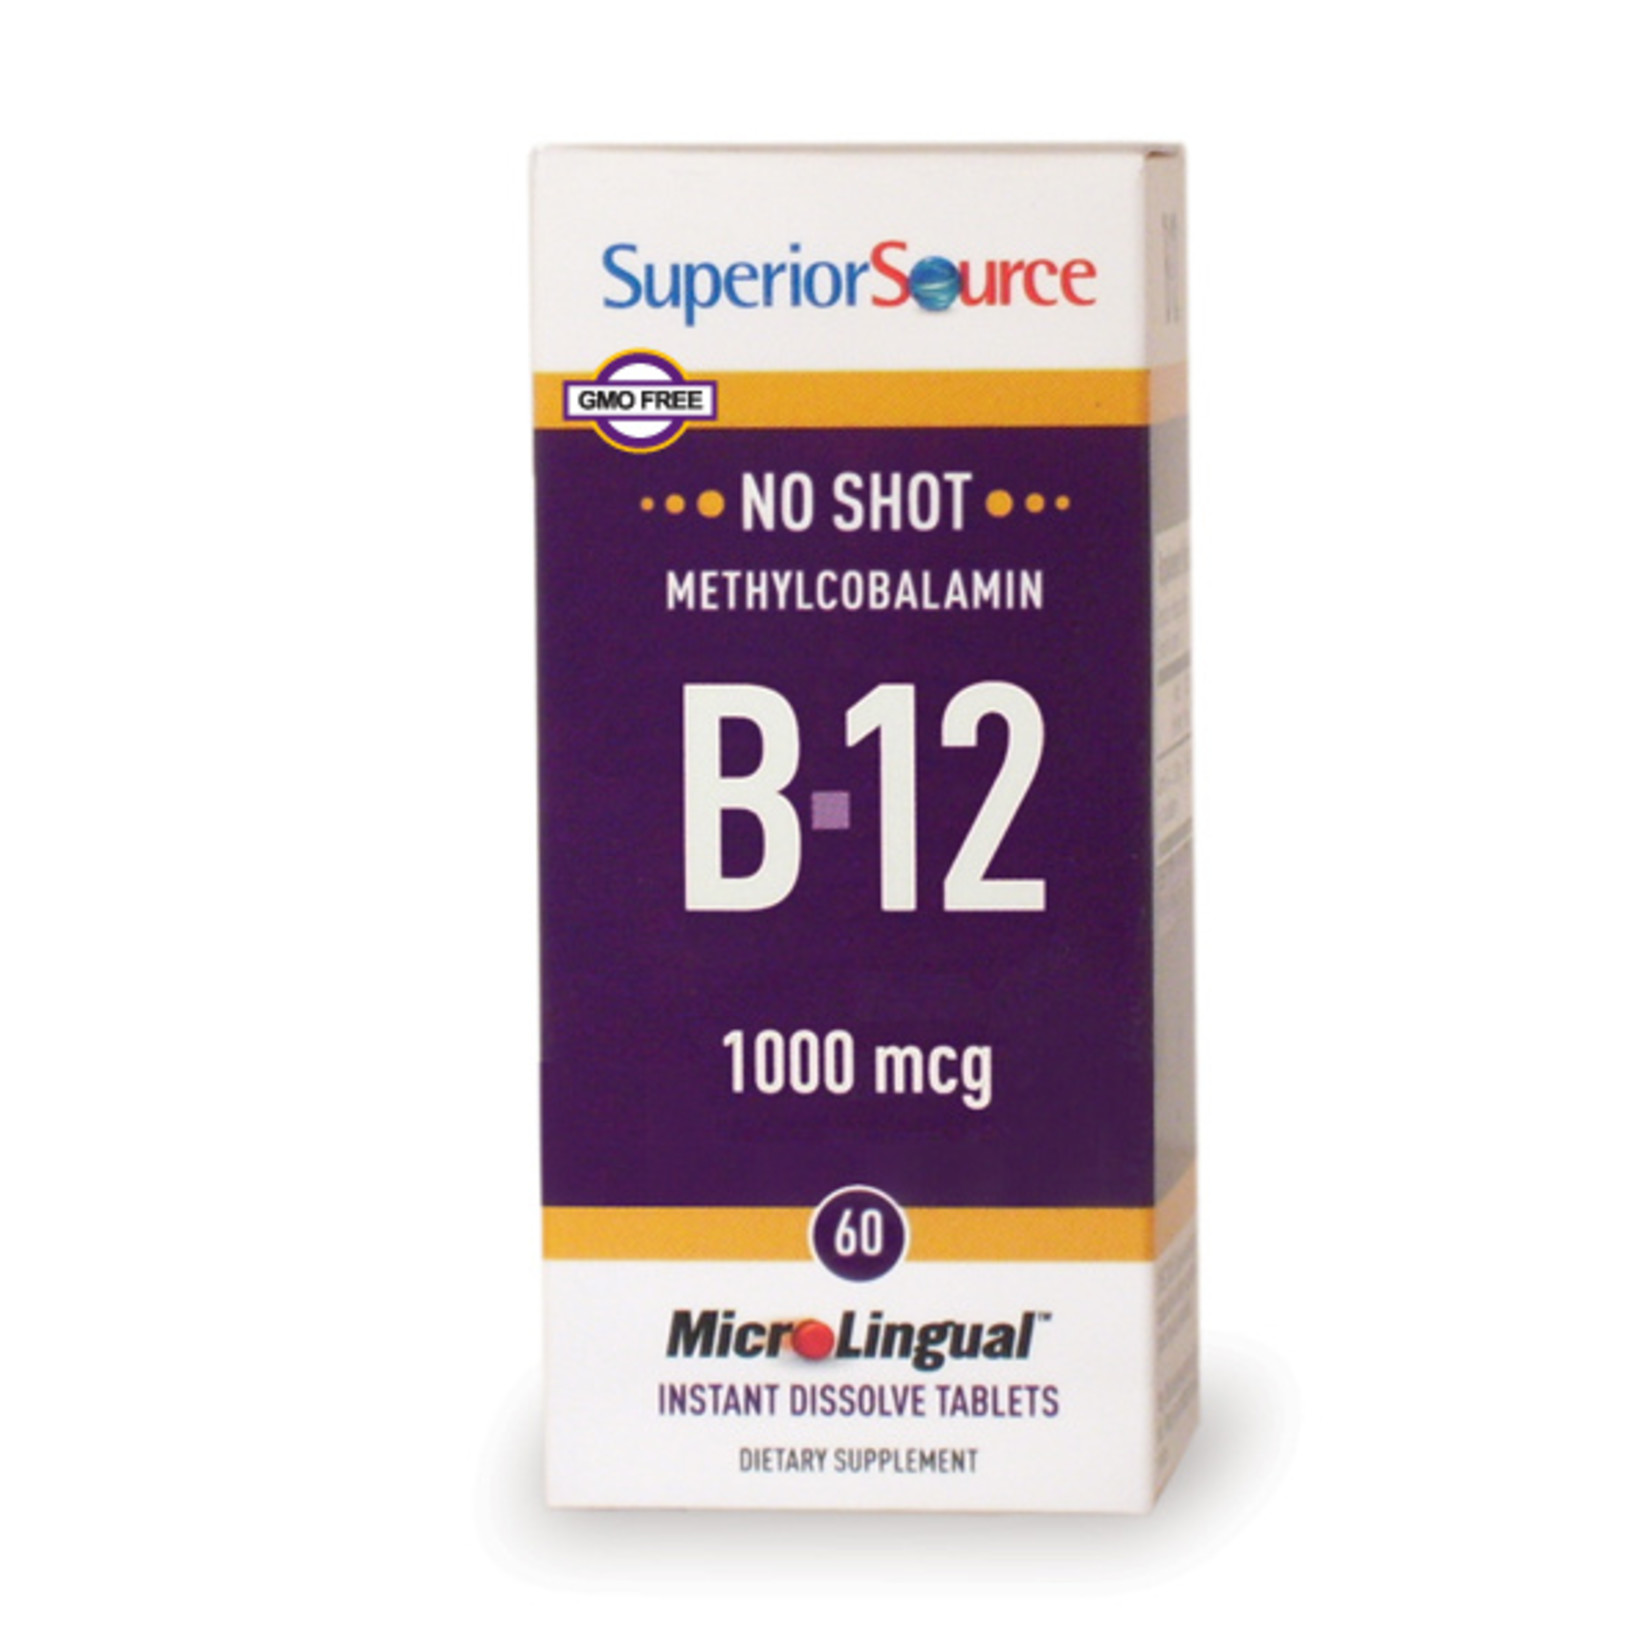 Superior Source Superior Source - Methylcobalamin B-12 1000 - 60 Tablets